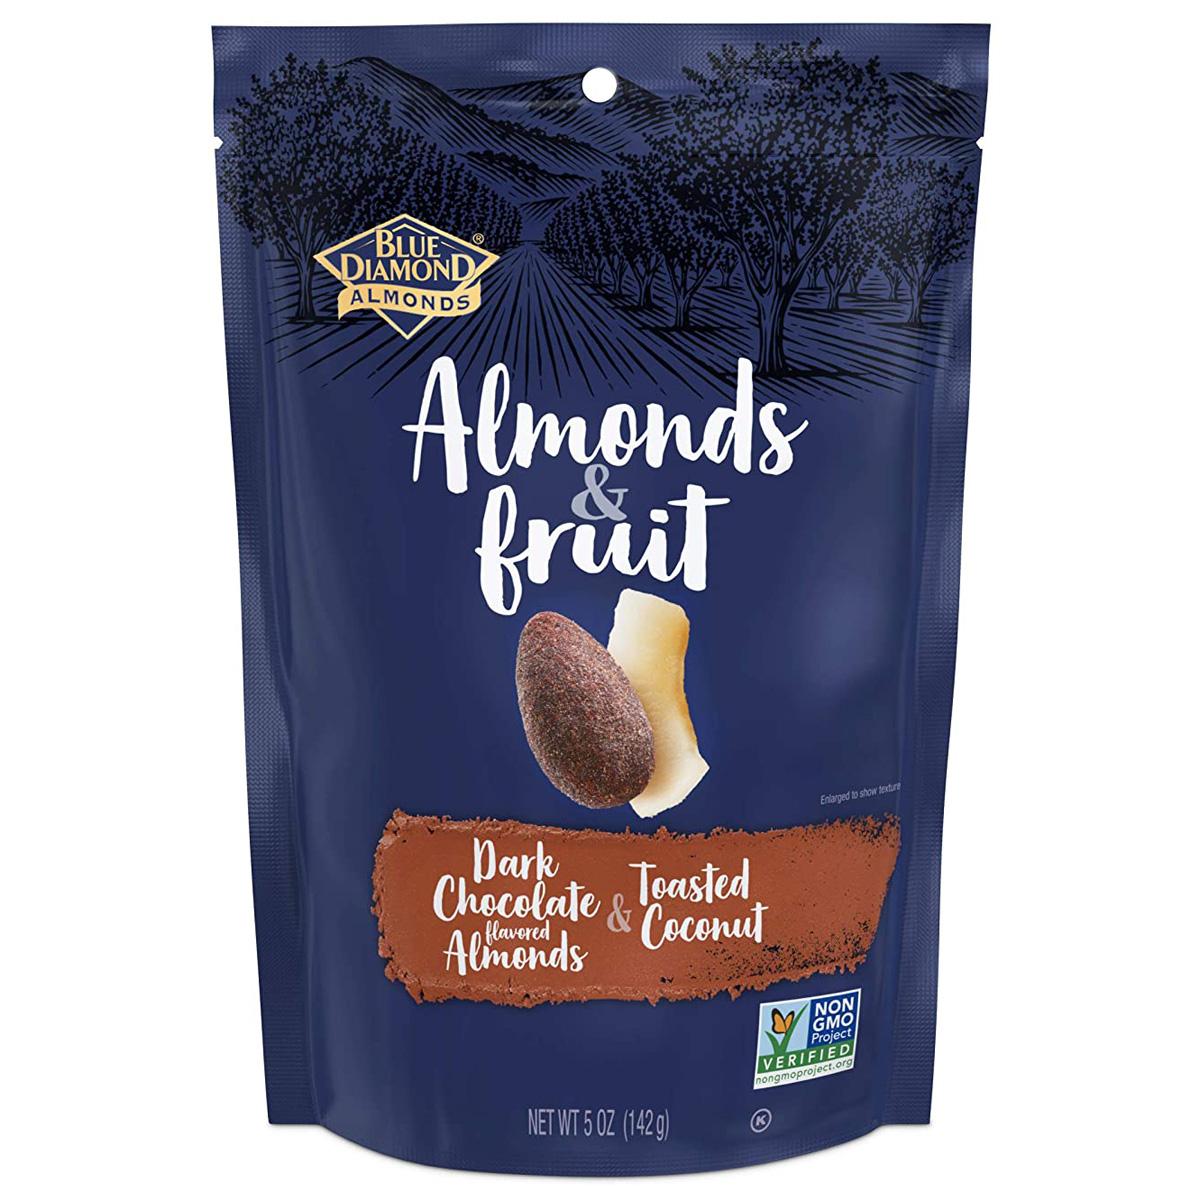 2 Blue Diamond Almonds and Fruit Bag for $4.99